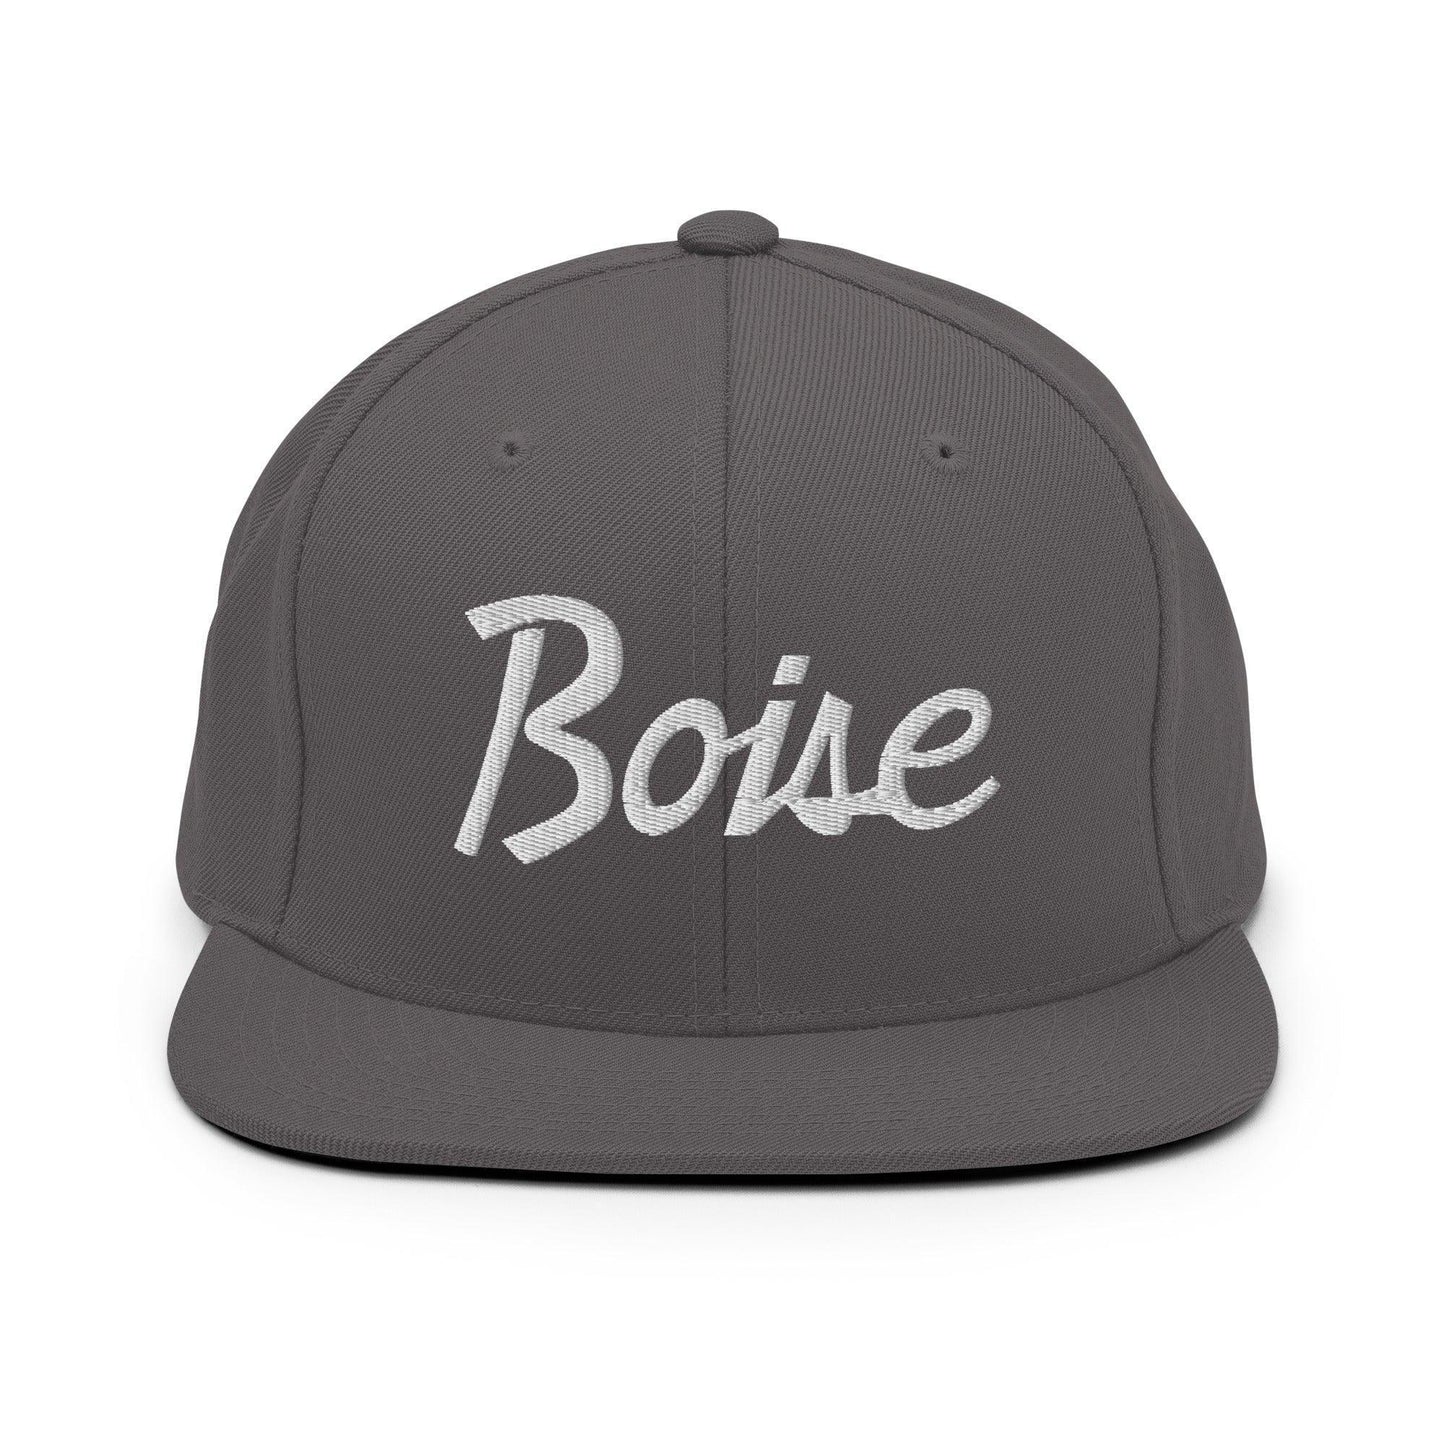 Boise Script Snapback Hat Dark Grey